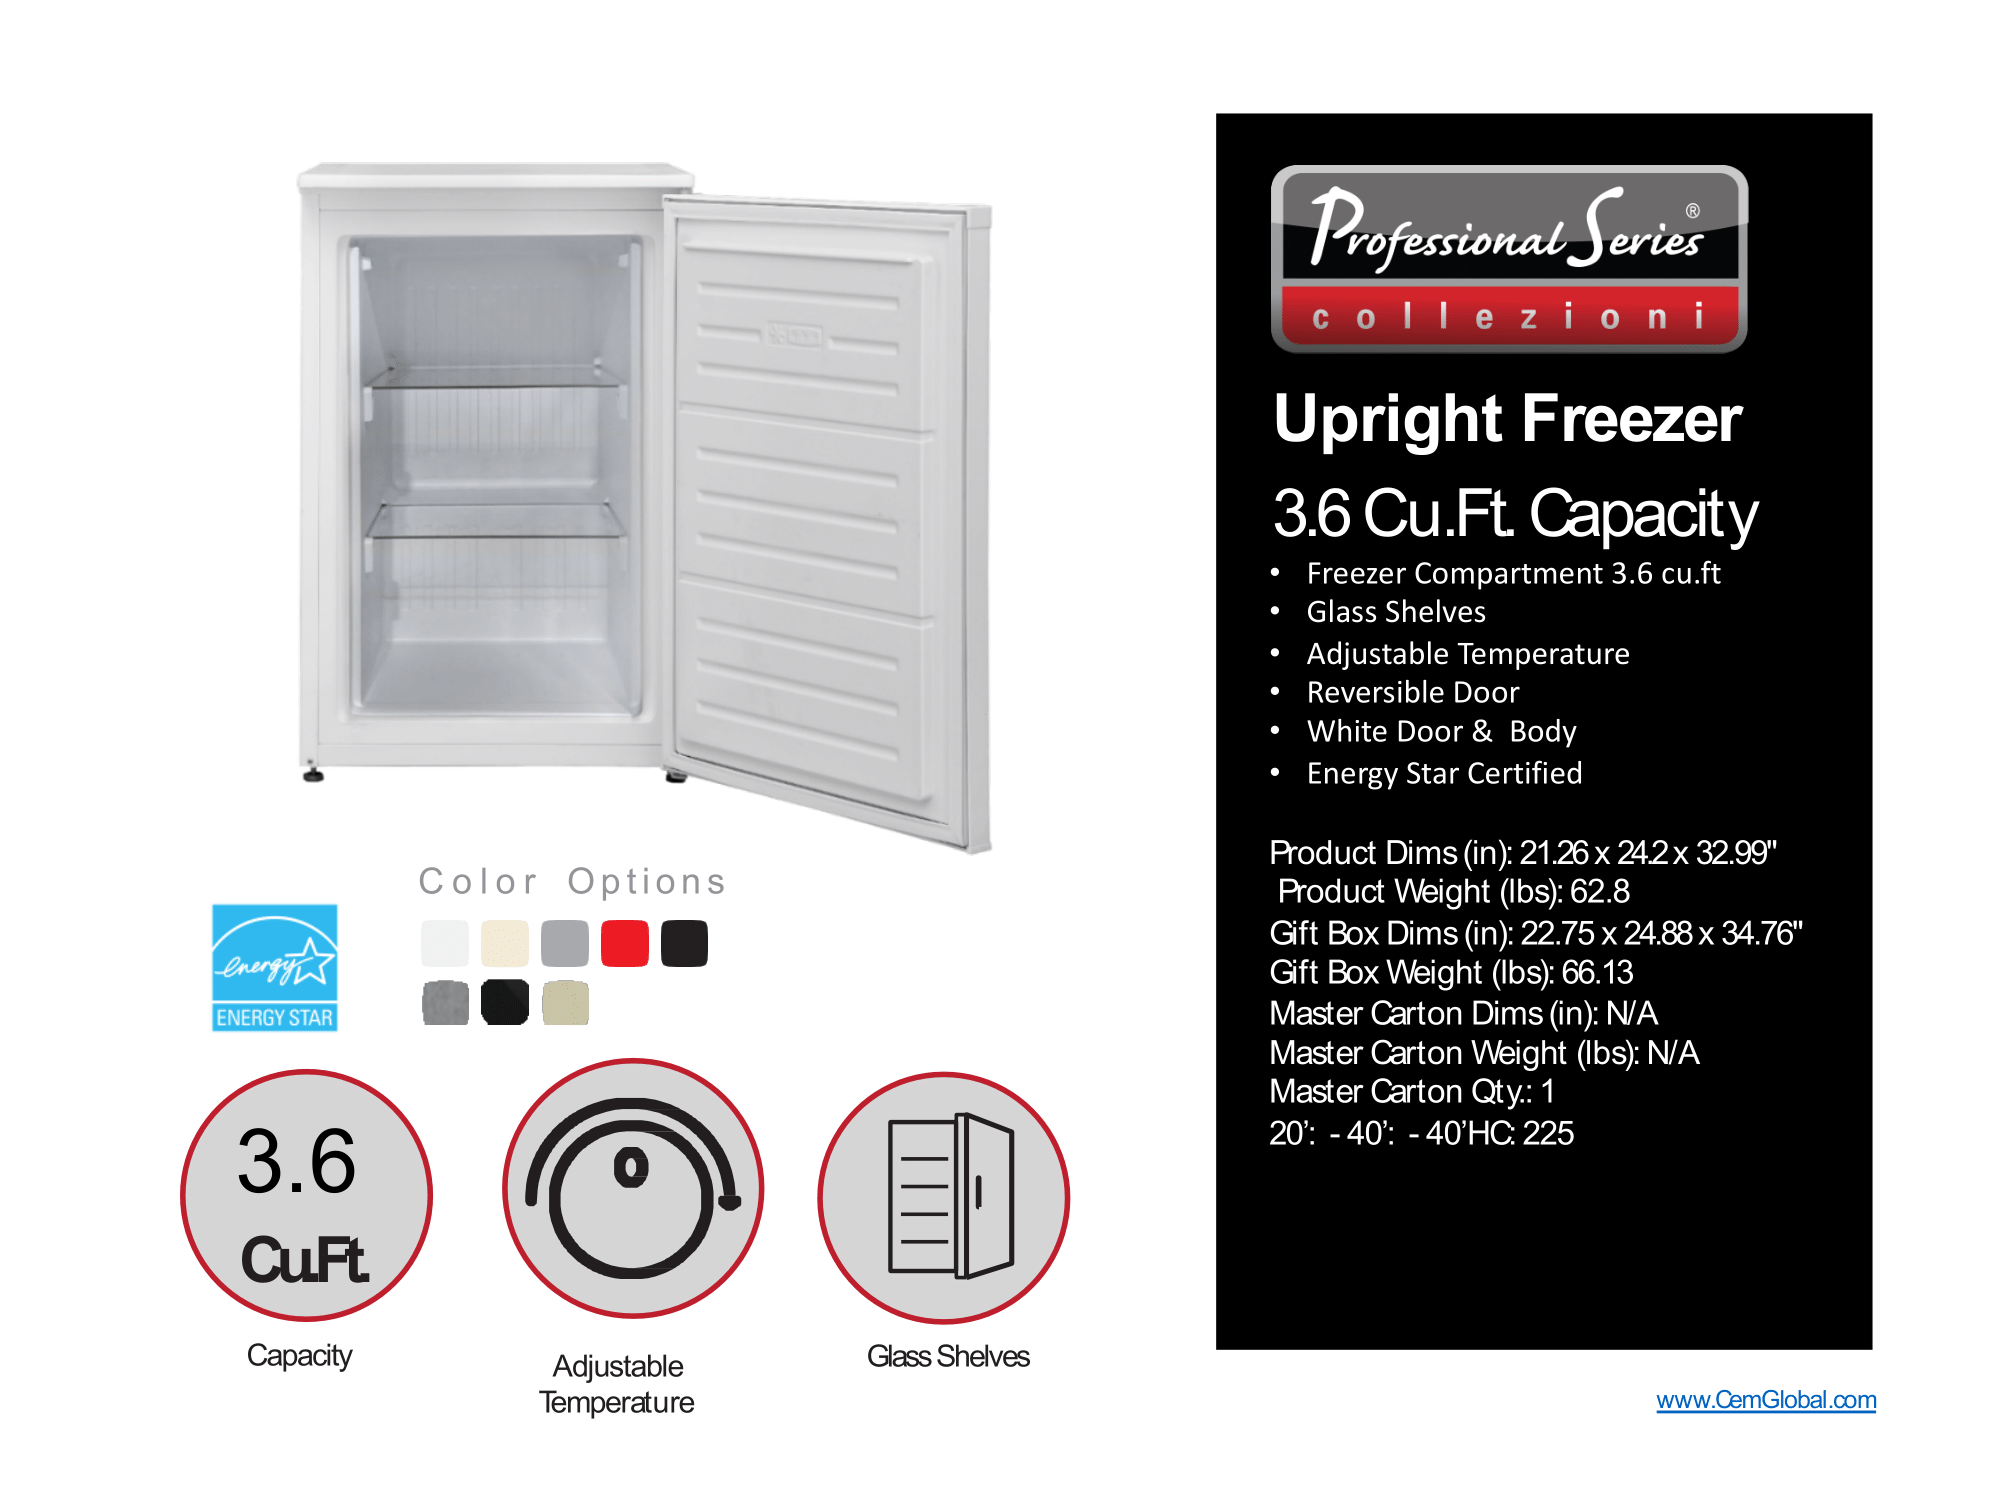 Upright Freezer 3.6 Cu.Ft. Capacity